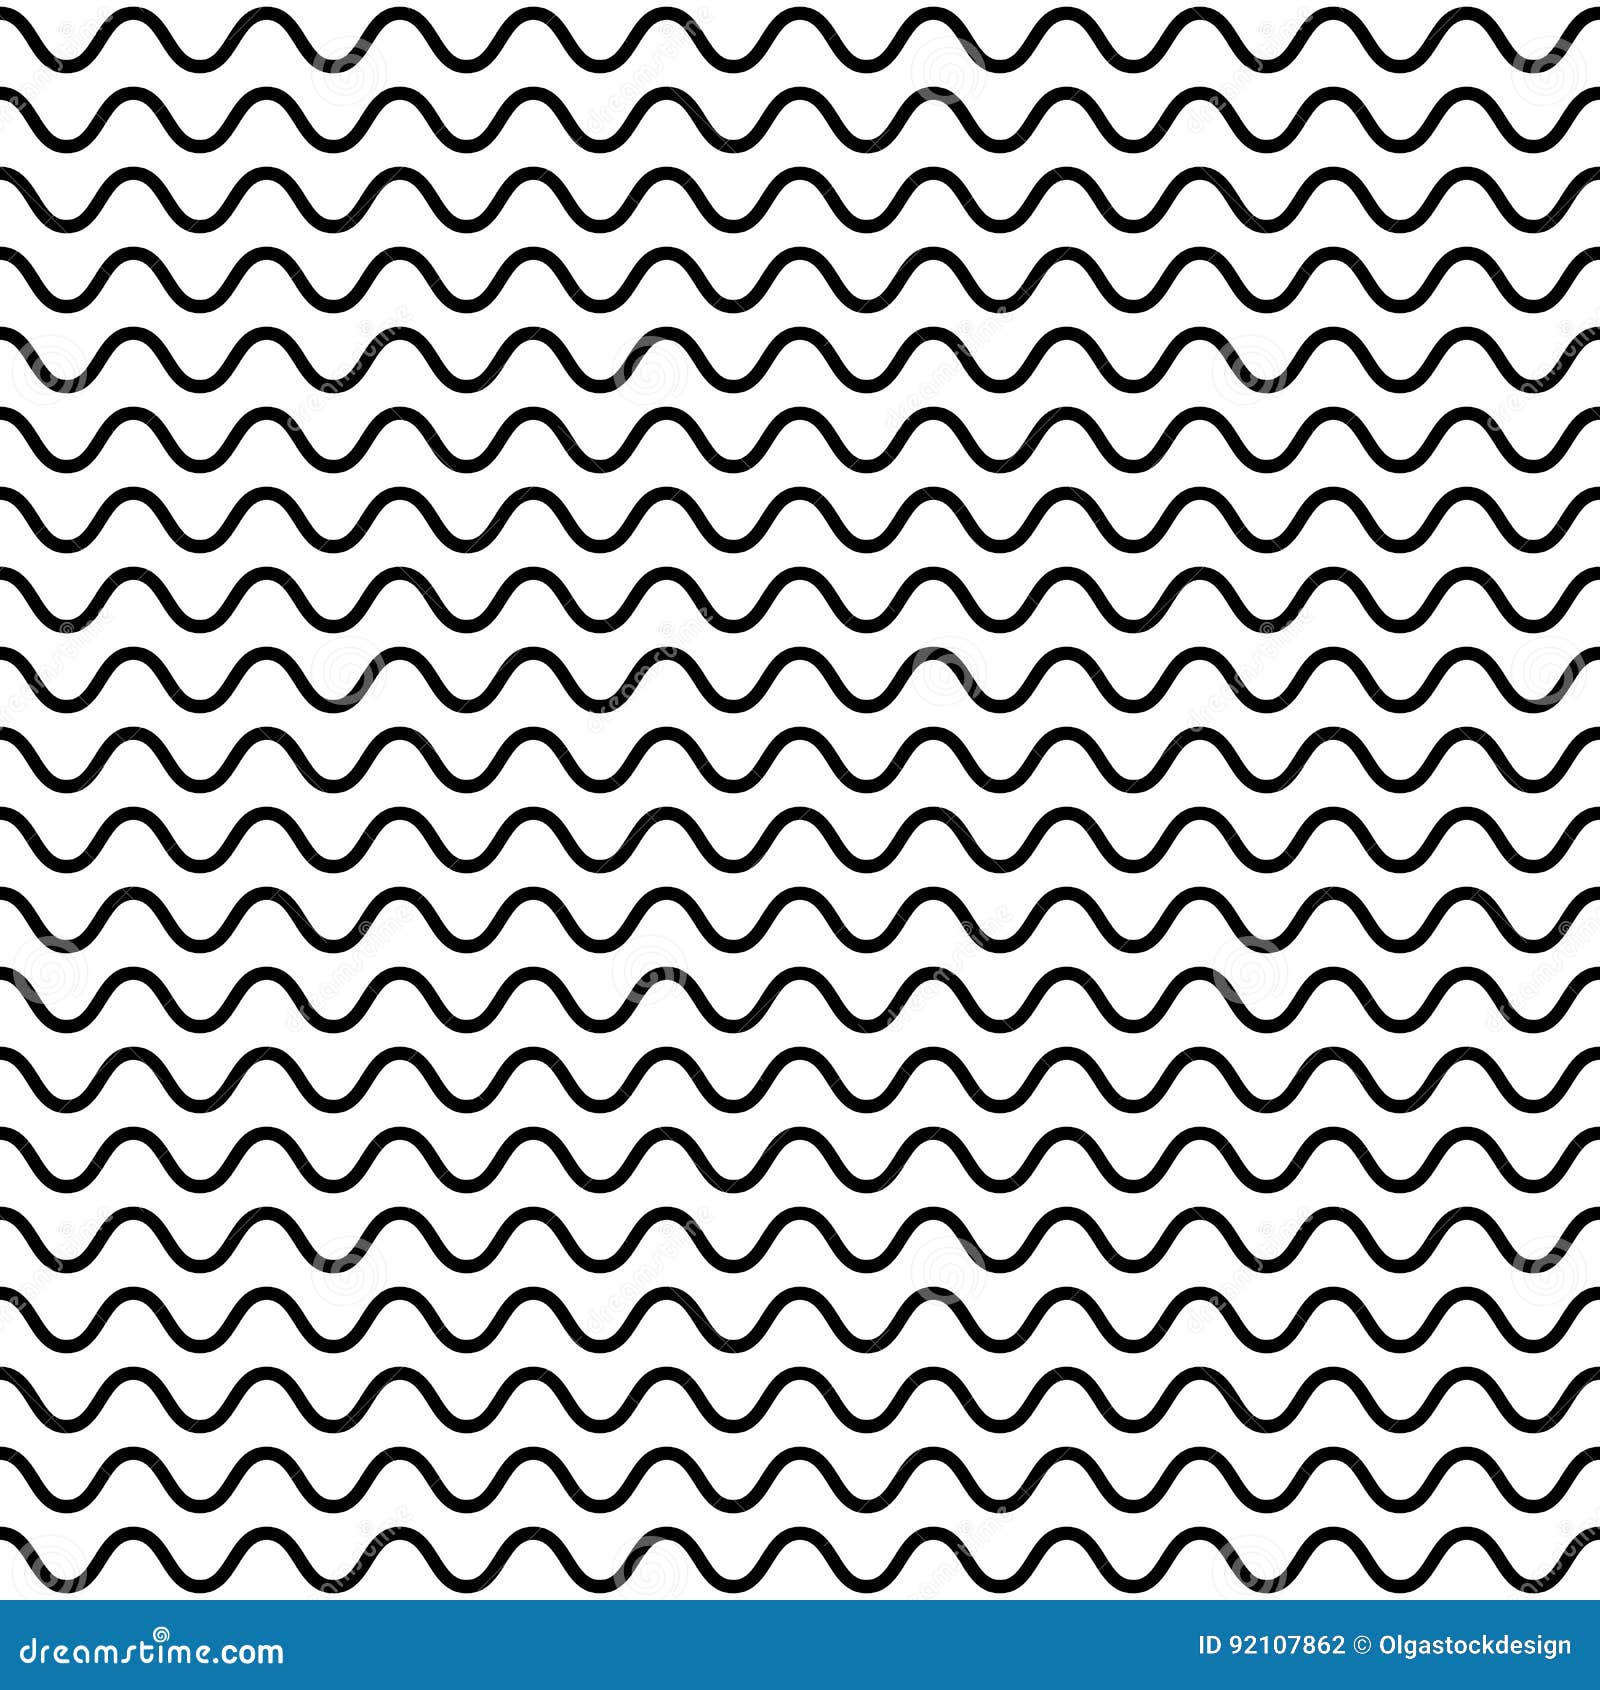 horizontal wavy lines,  seamless pattern